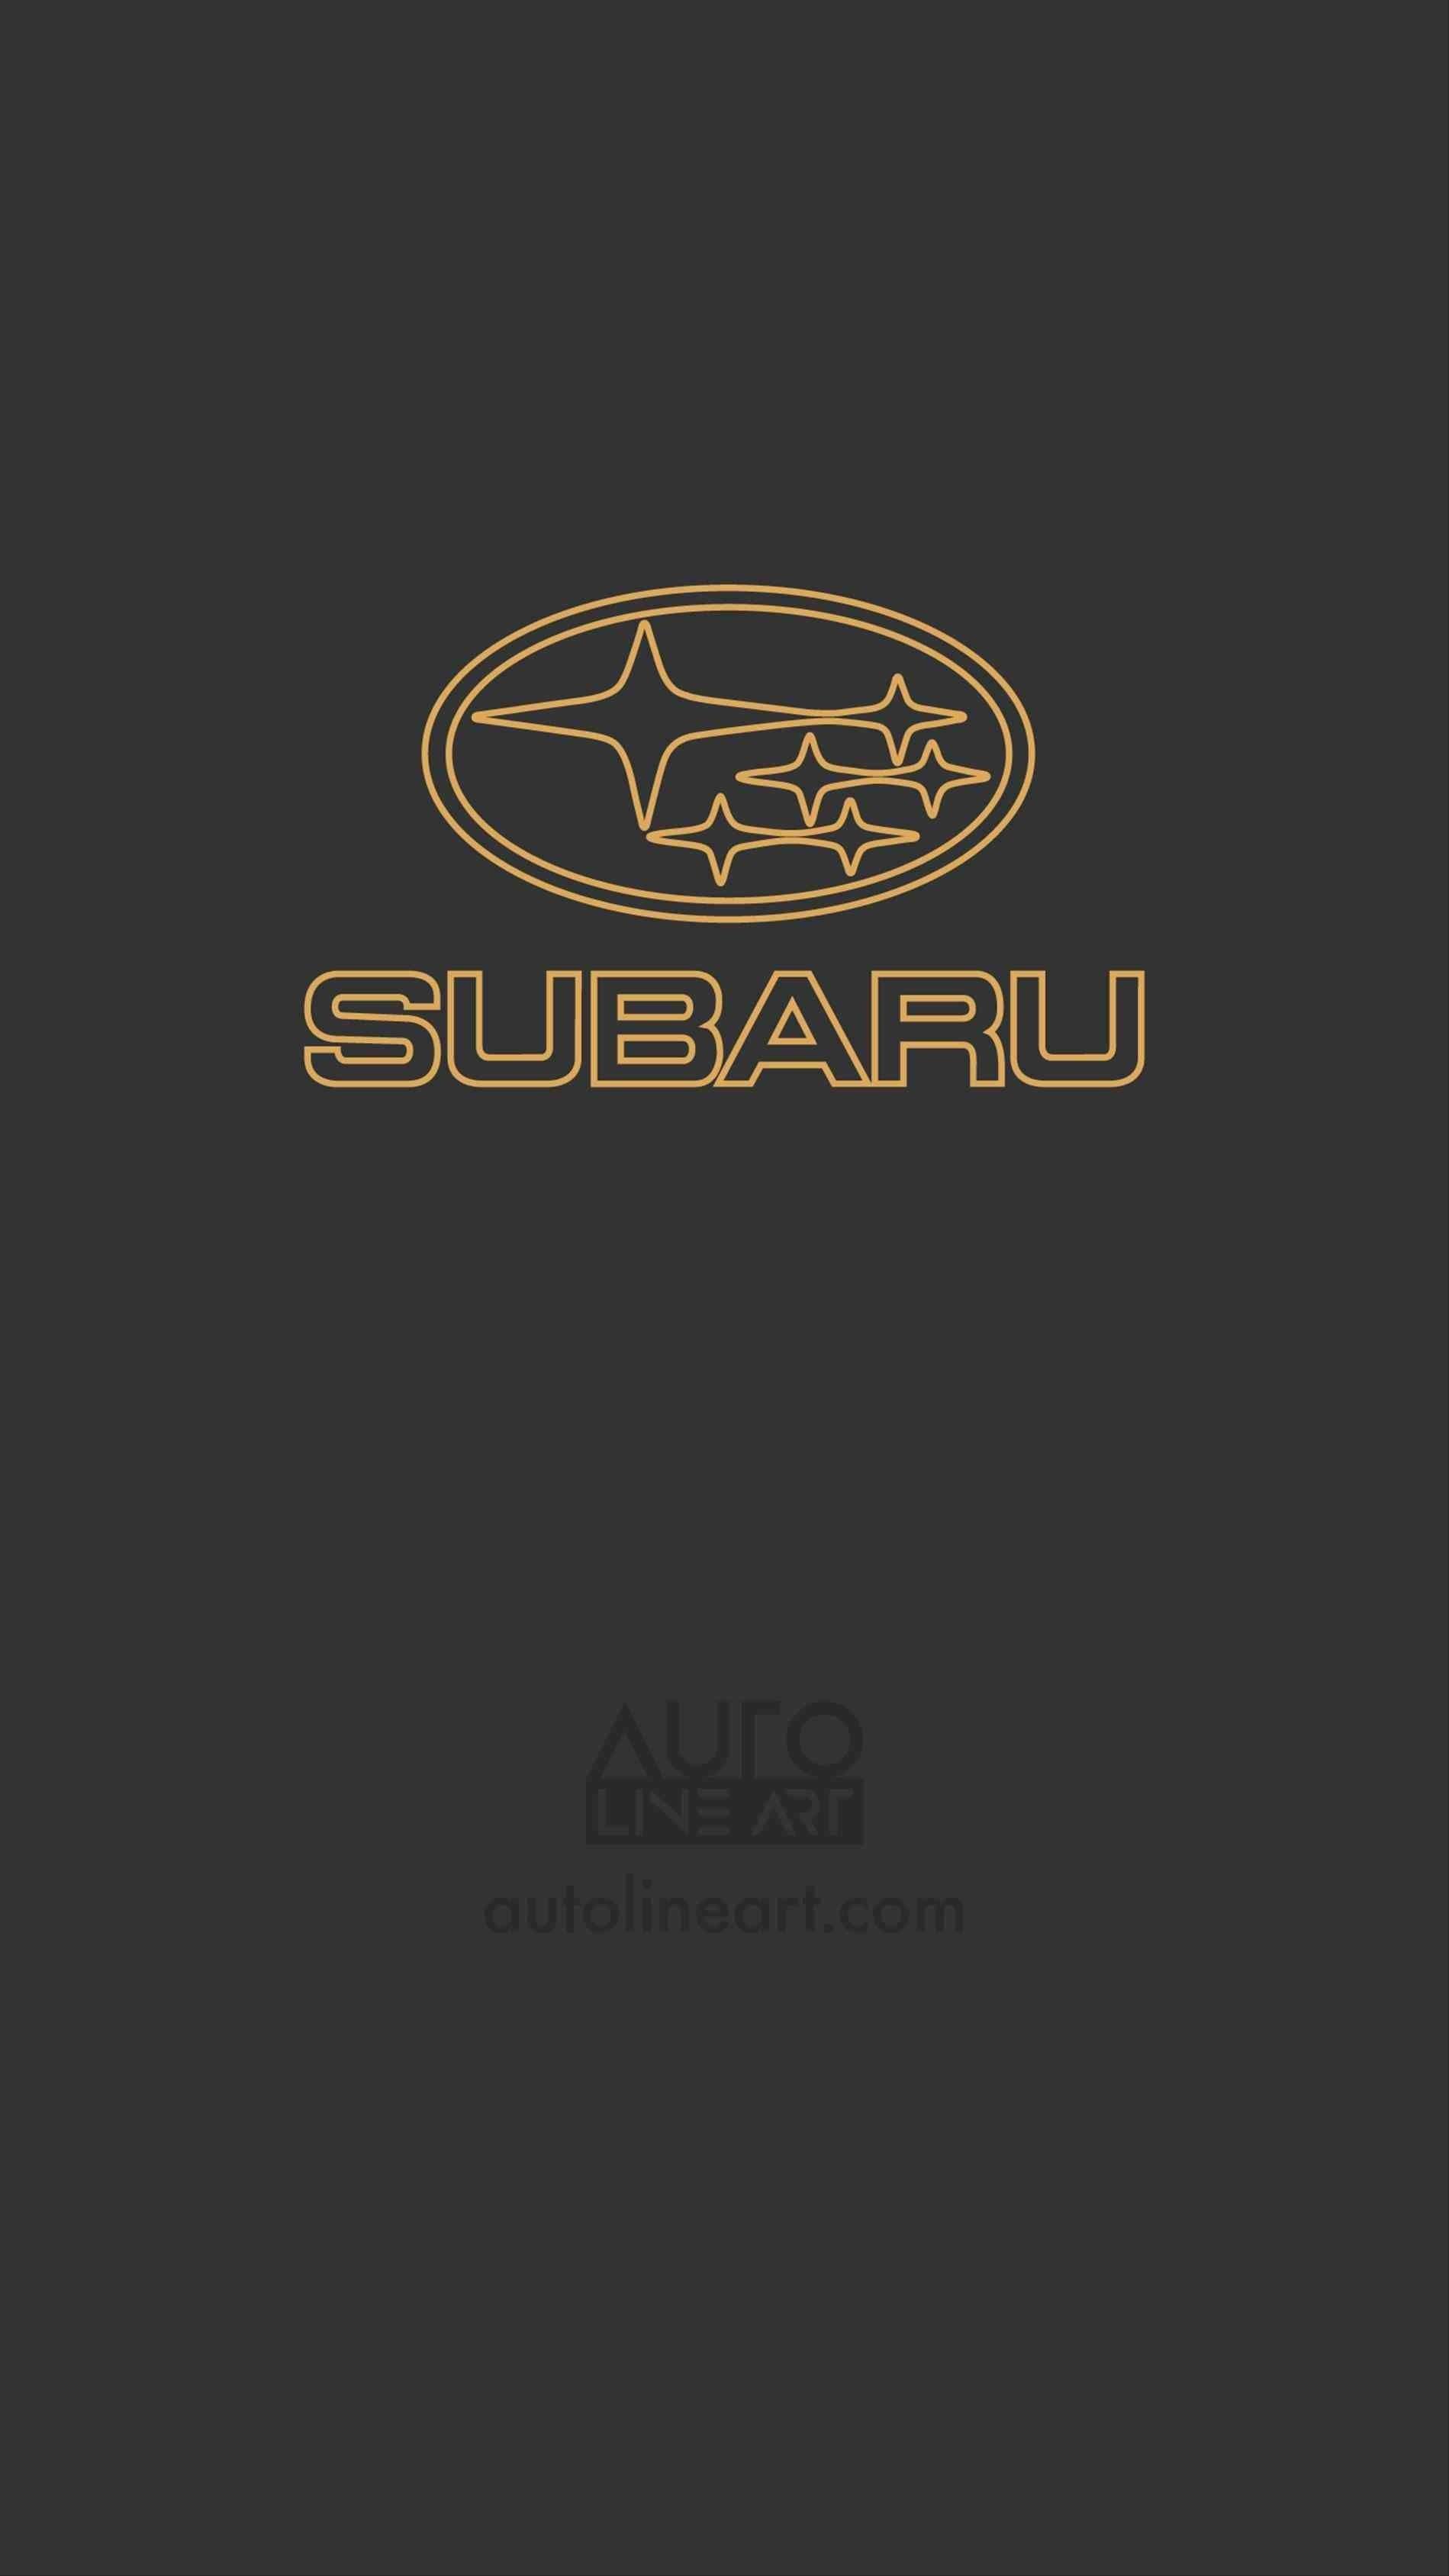 Subaru Emblem Phone Wallpapers Wallpaper Cave